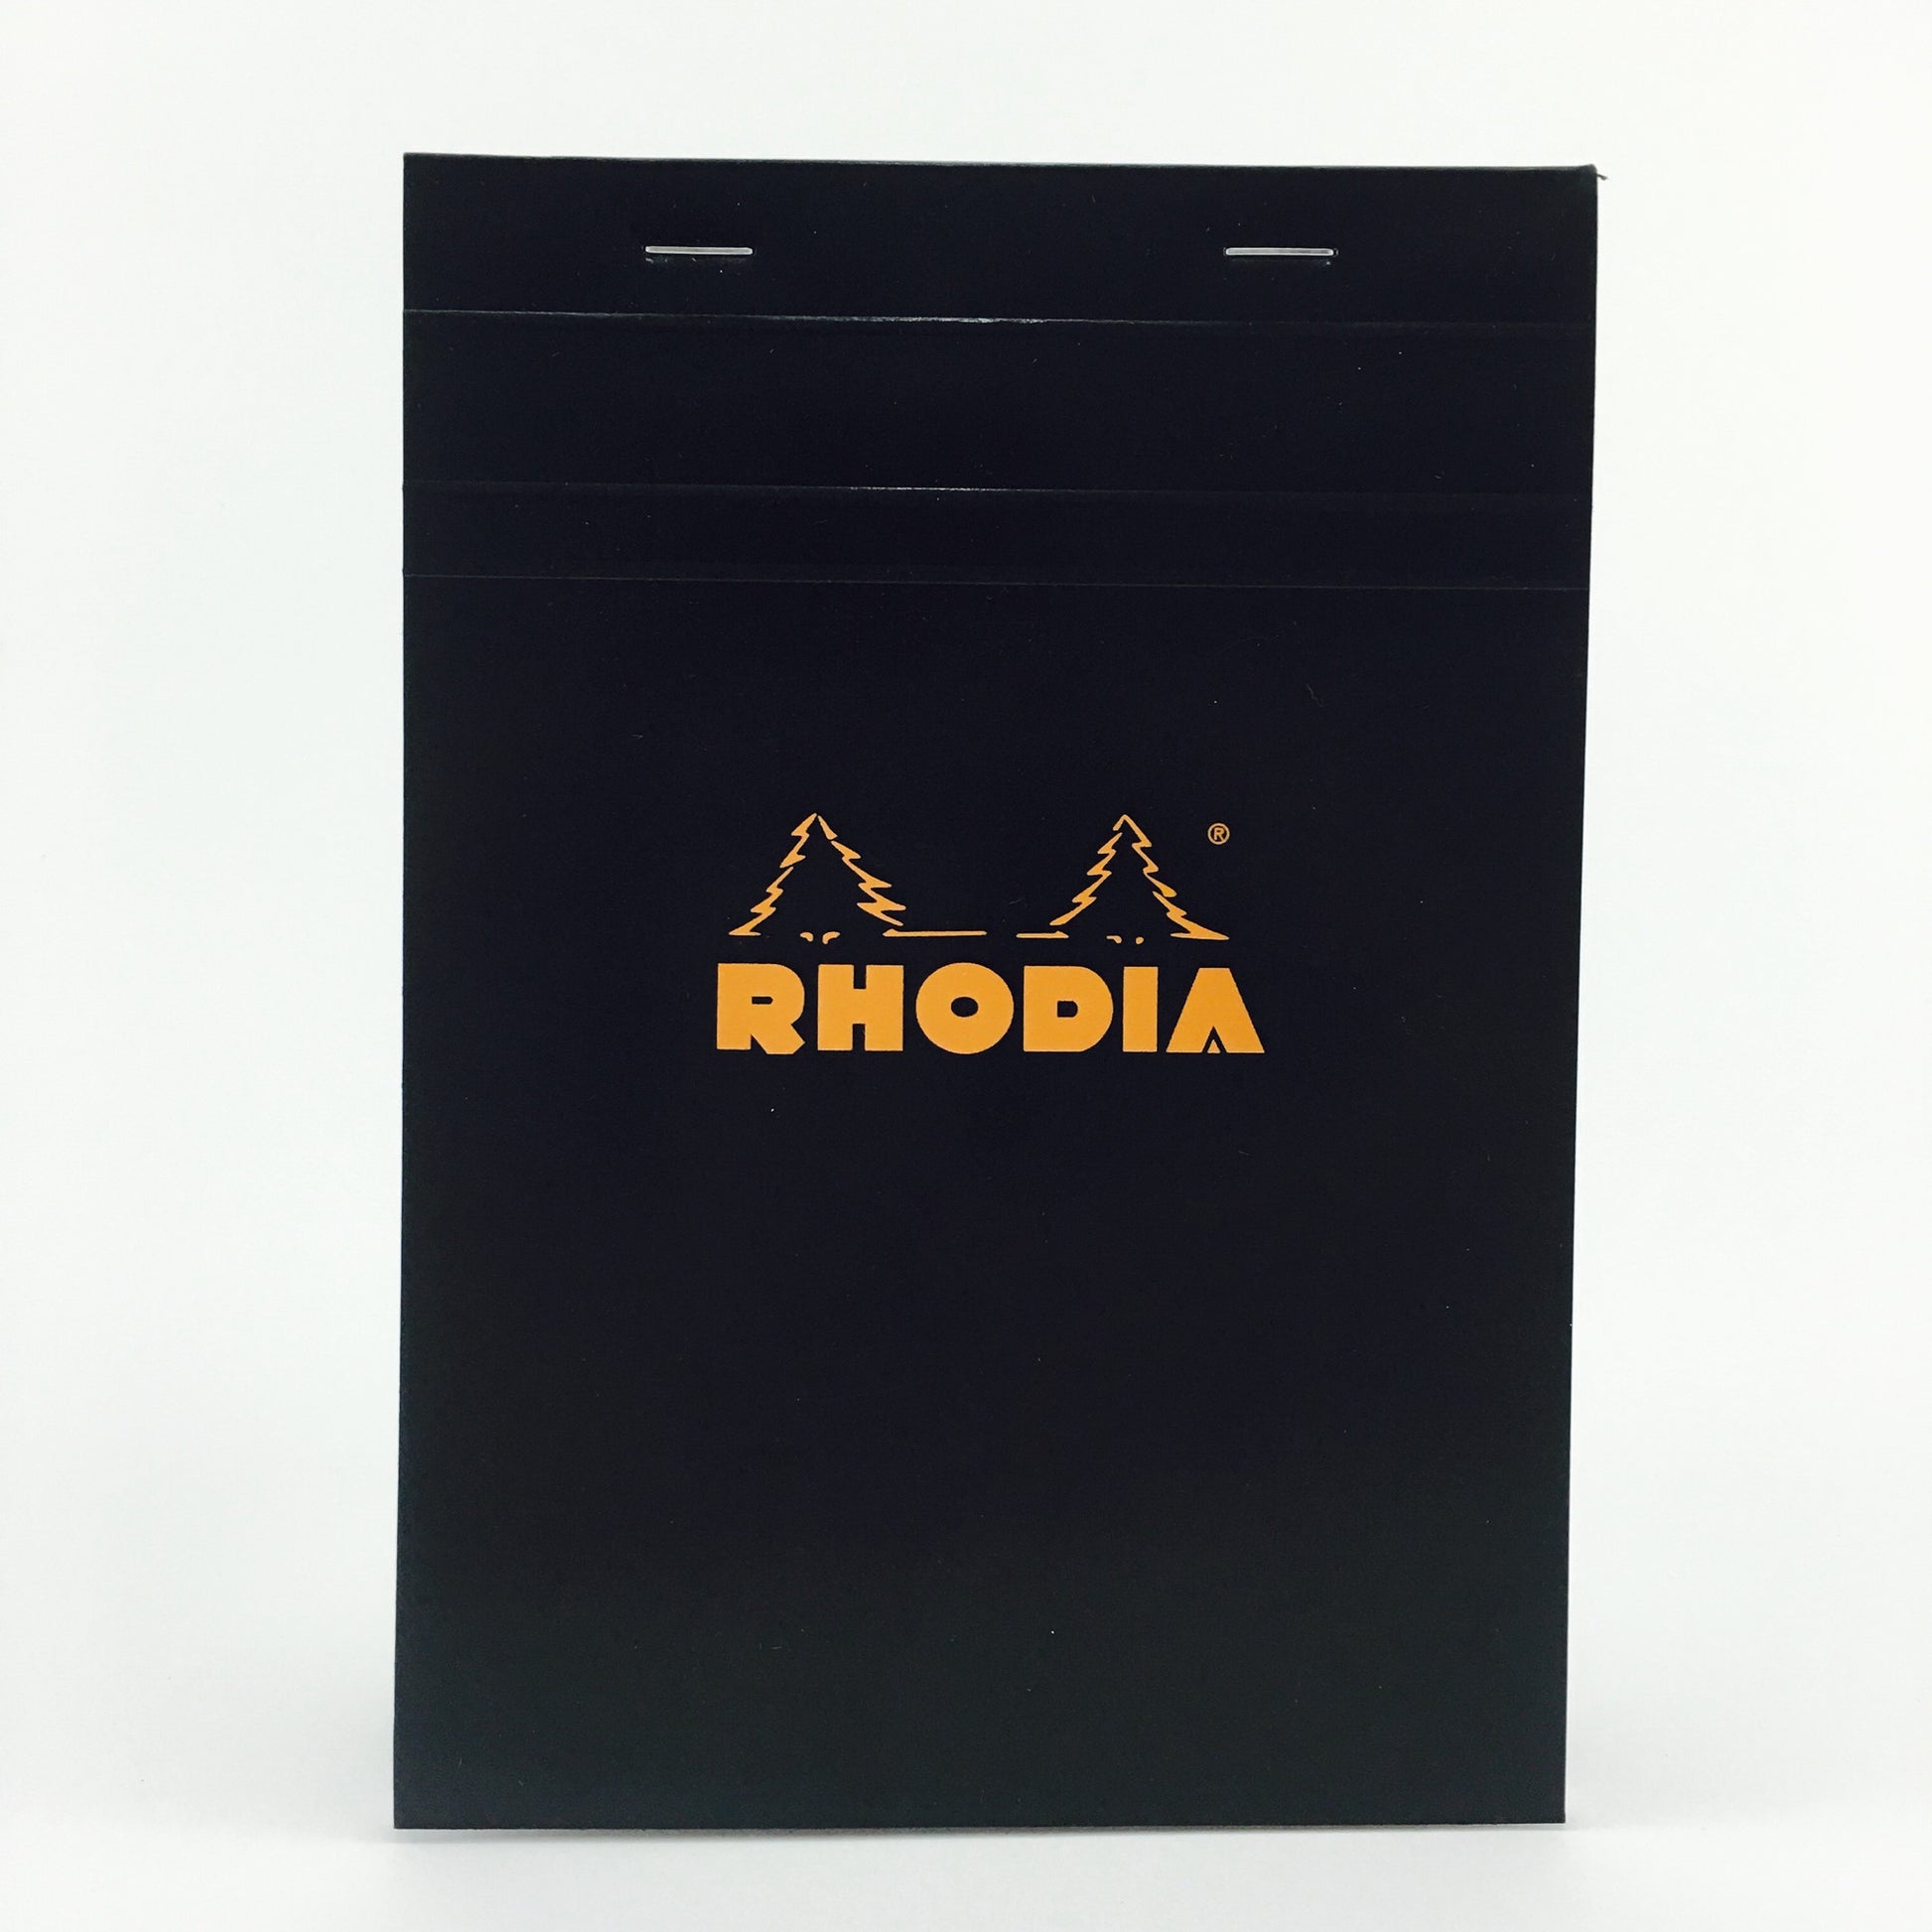 Rhodia Pads – Odd Nodd Art Supply